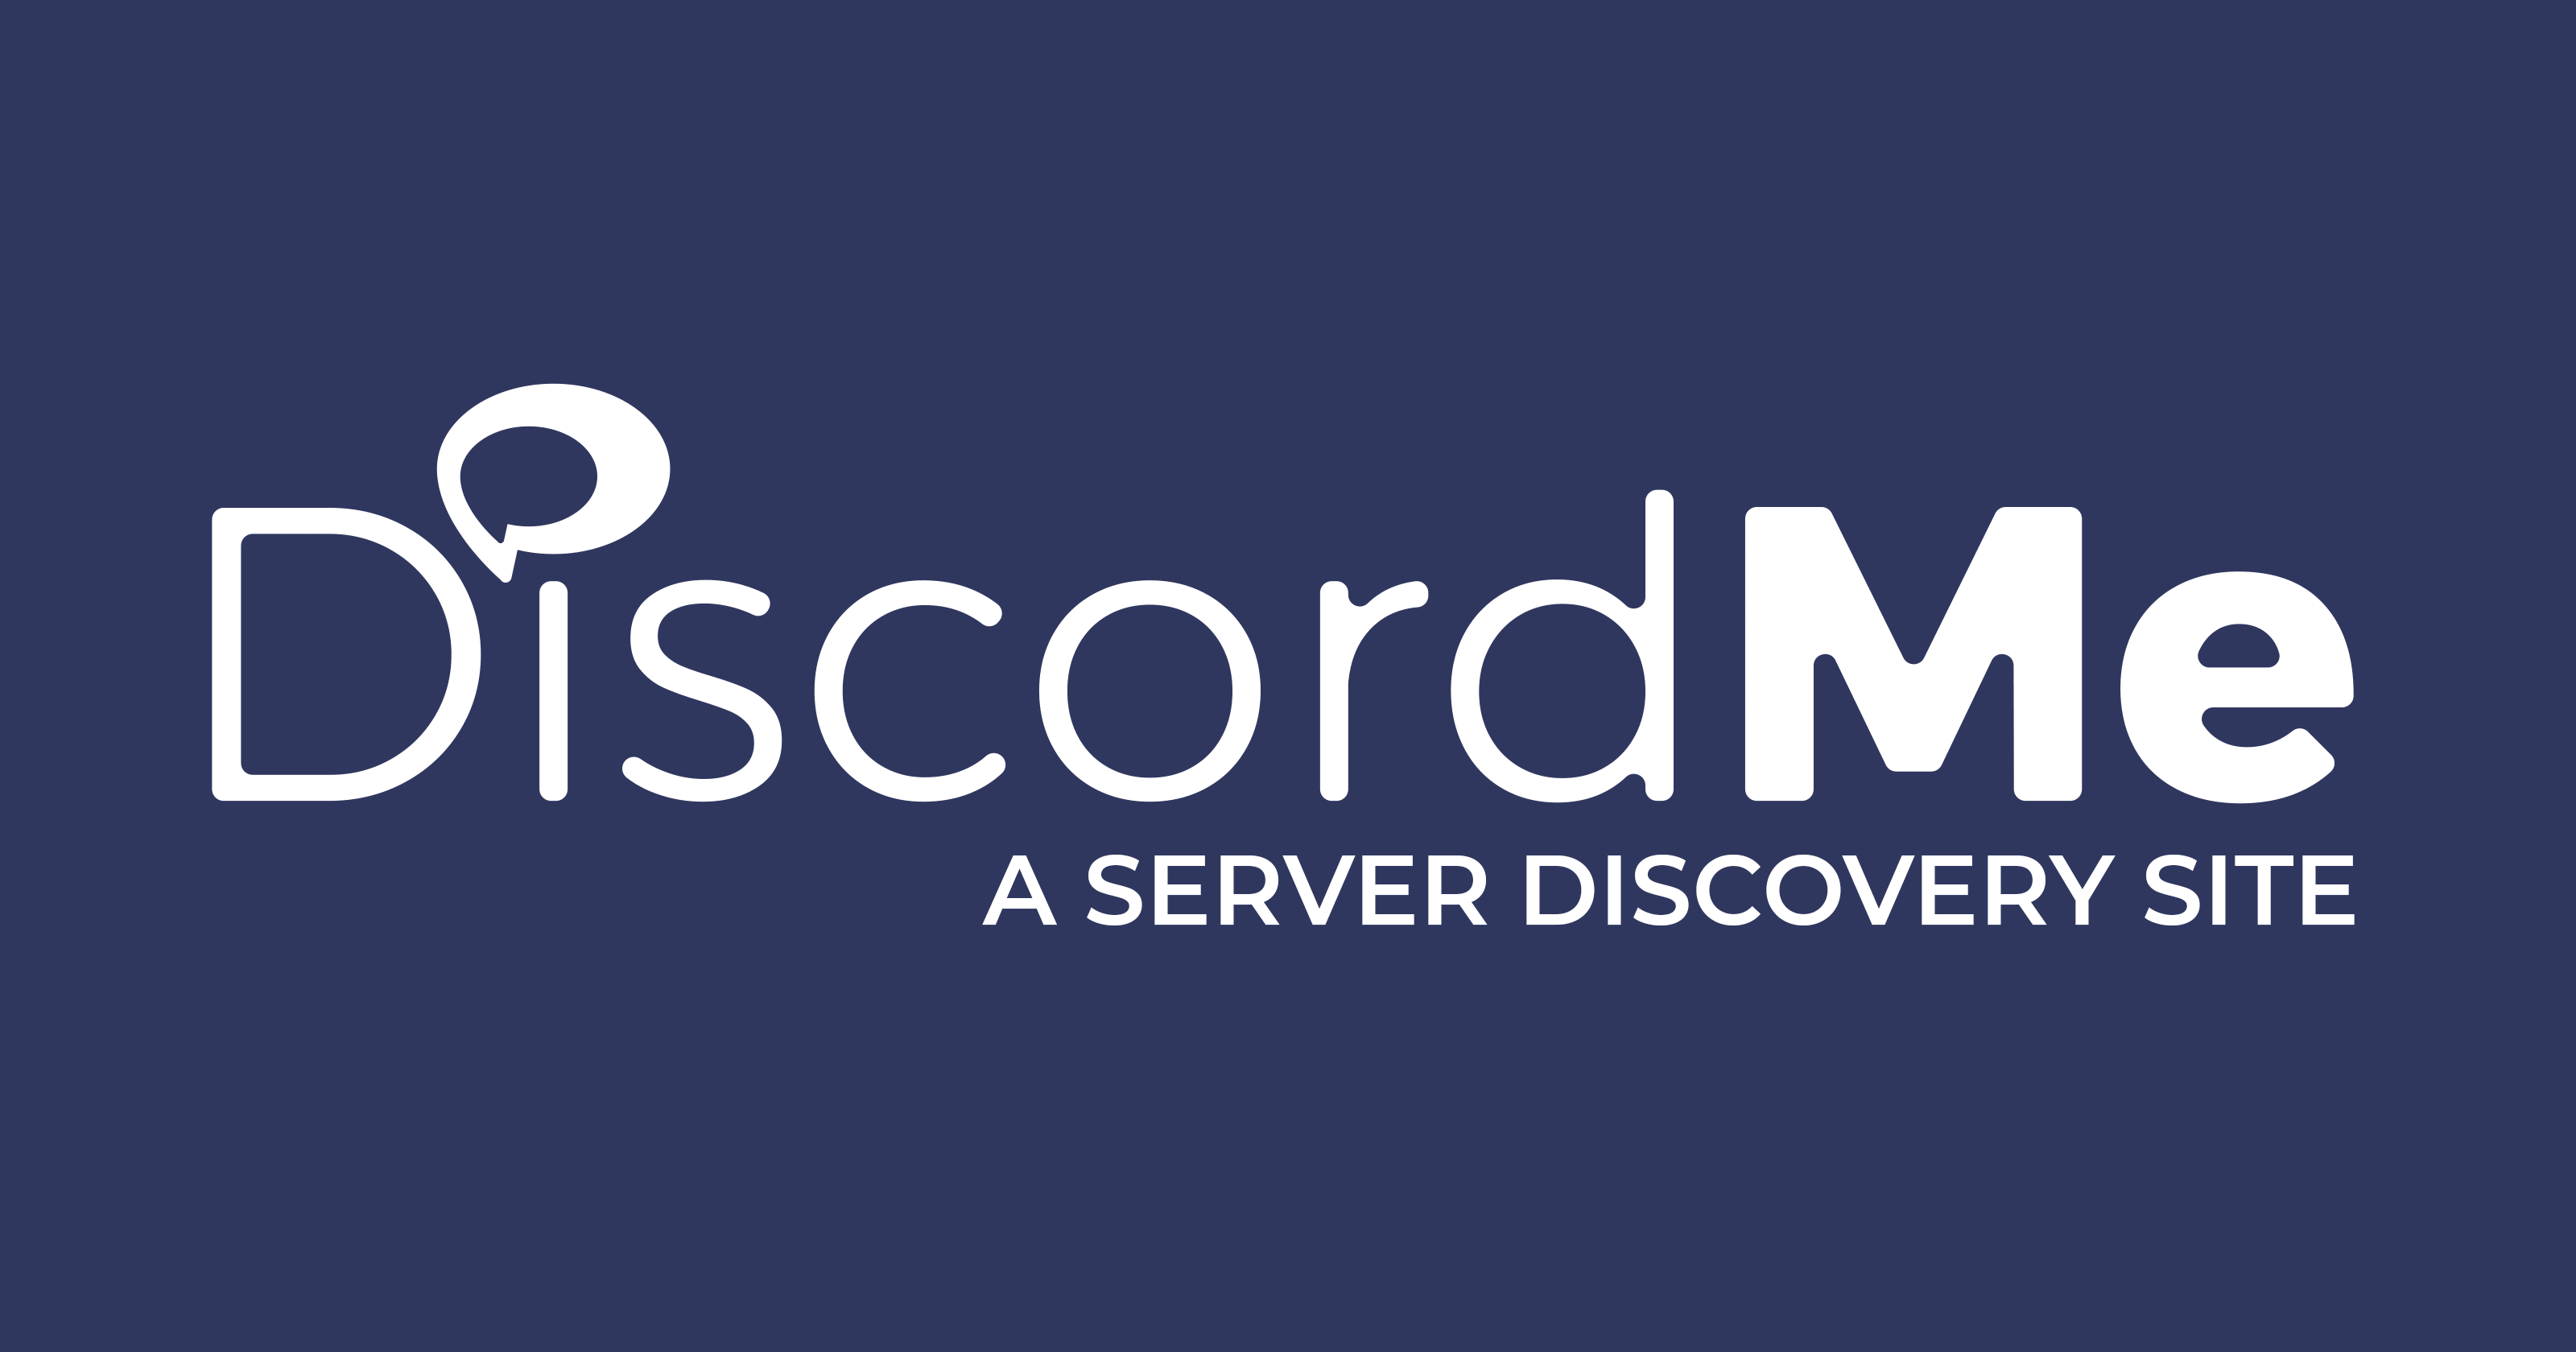 Public Music Discord Servers